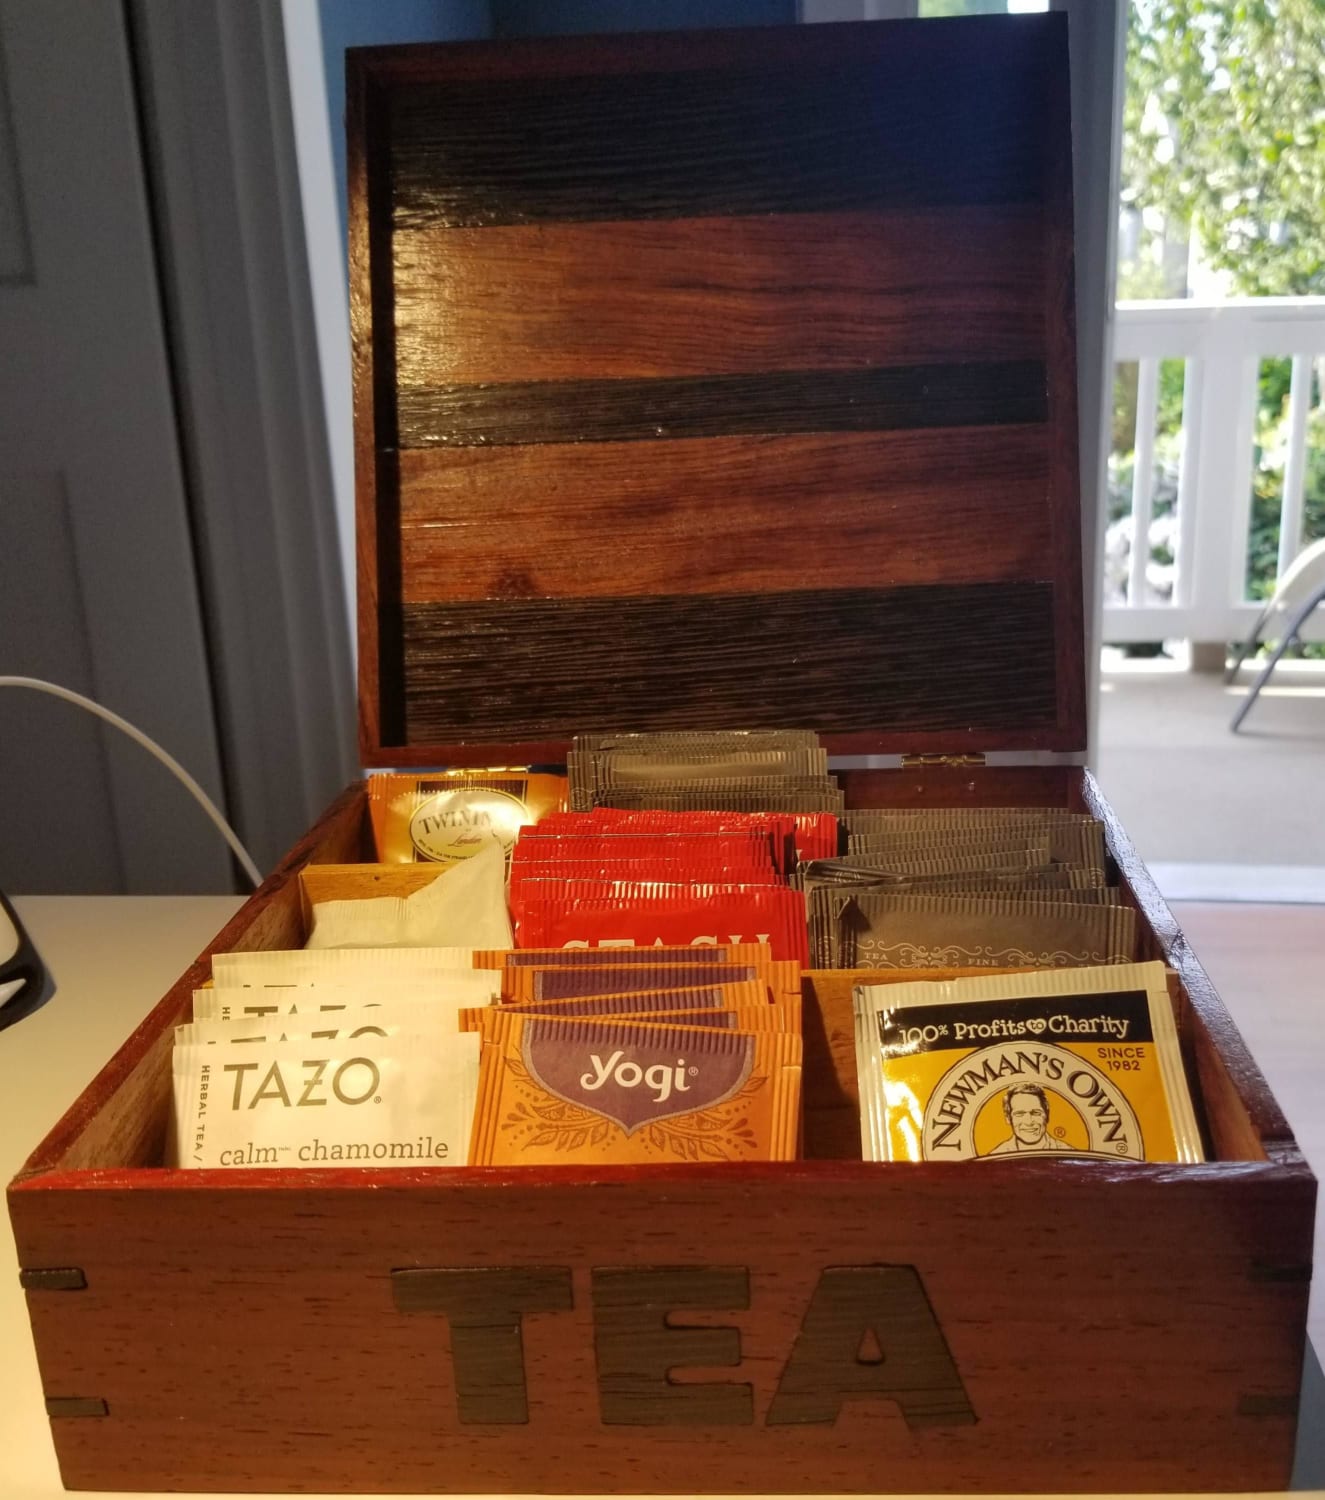 I've always wanted a fancy tea box, so I finally made one myself!